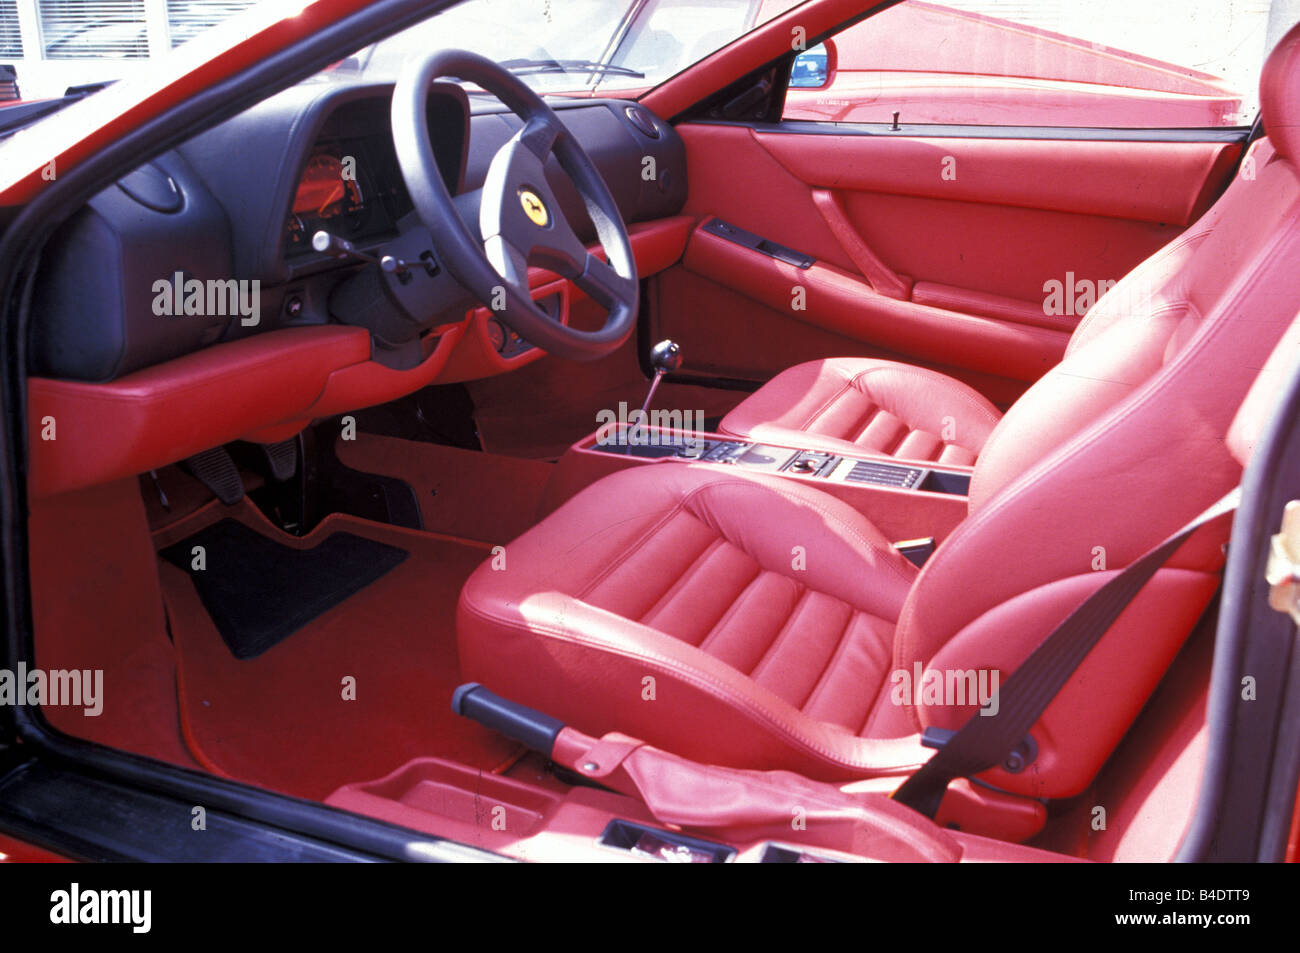 Car, Ferrari Testarossa, roadster, red, model year 1984-1991, 390 PS, Höchstgeschwindigkeit 290 km/h, coupe/Coupe, interior view Stock Photo